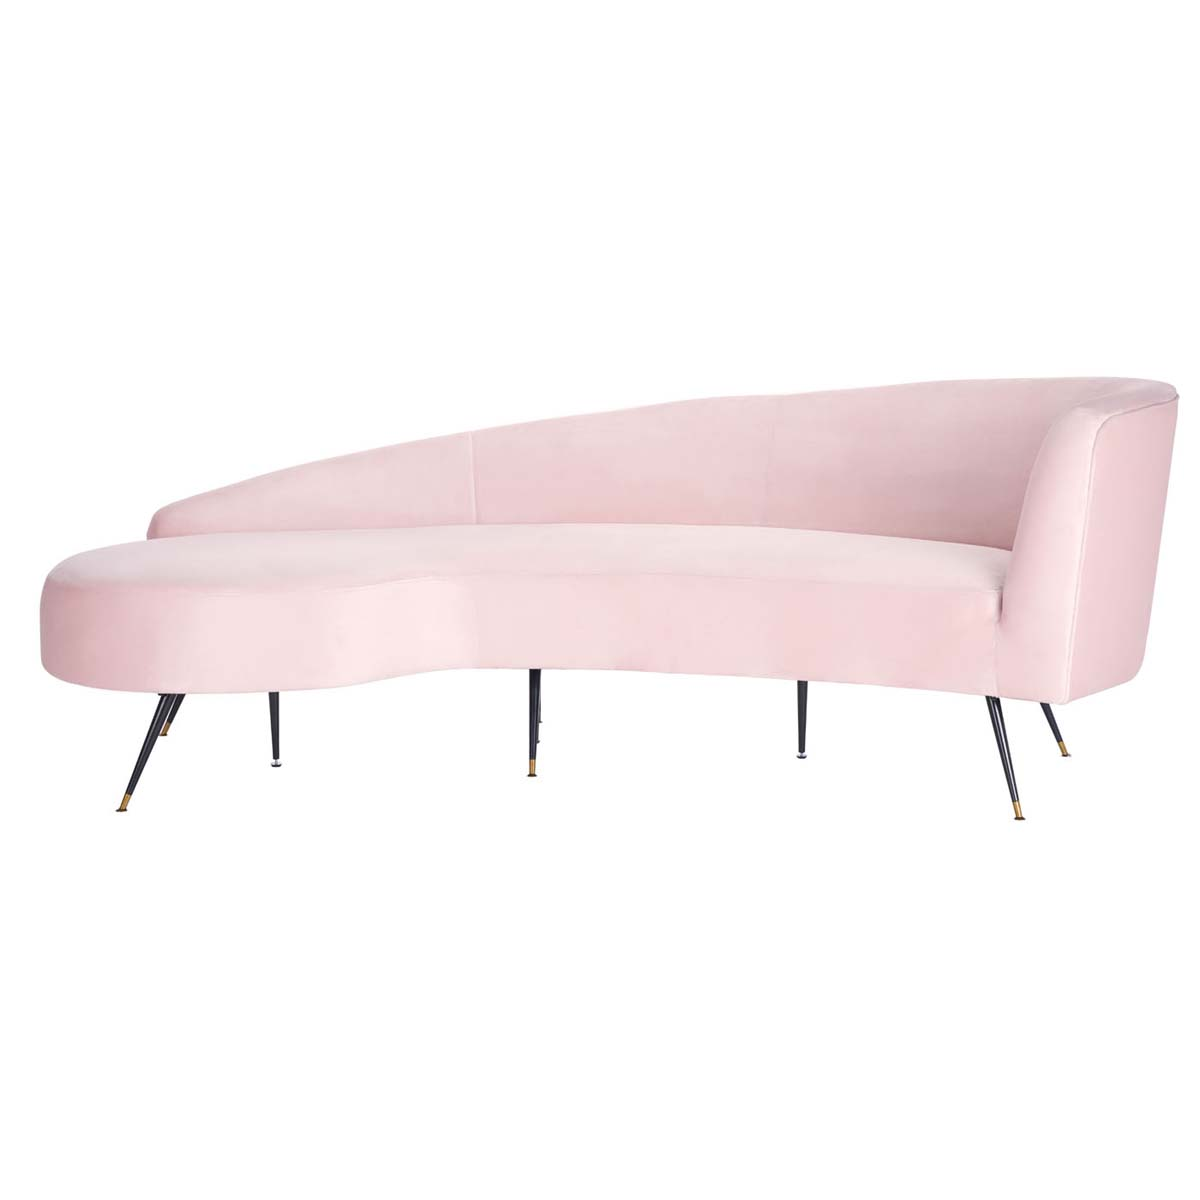 Safavieh Couture Evangeline Velvet Parisian Sofa - Pale Pink